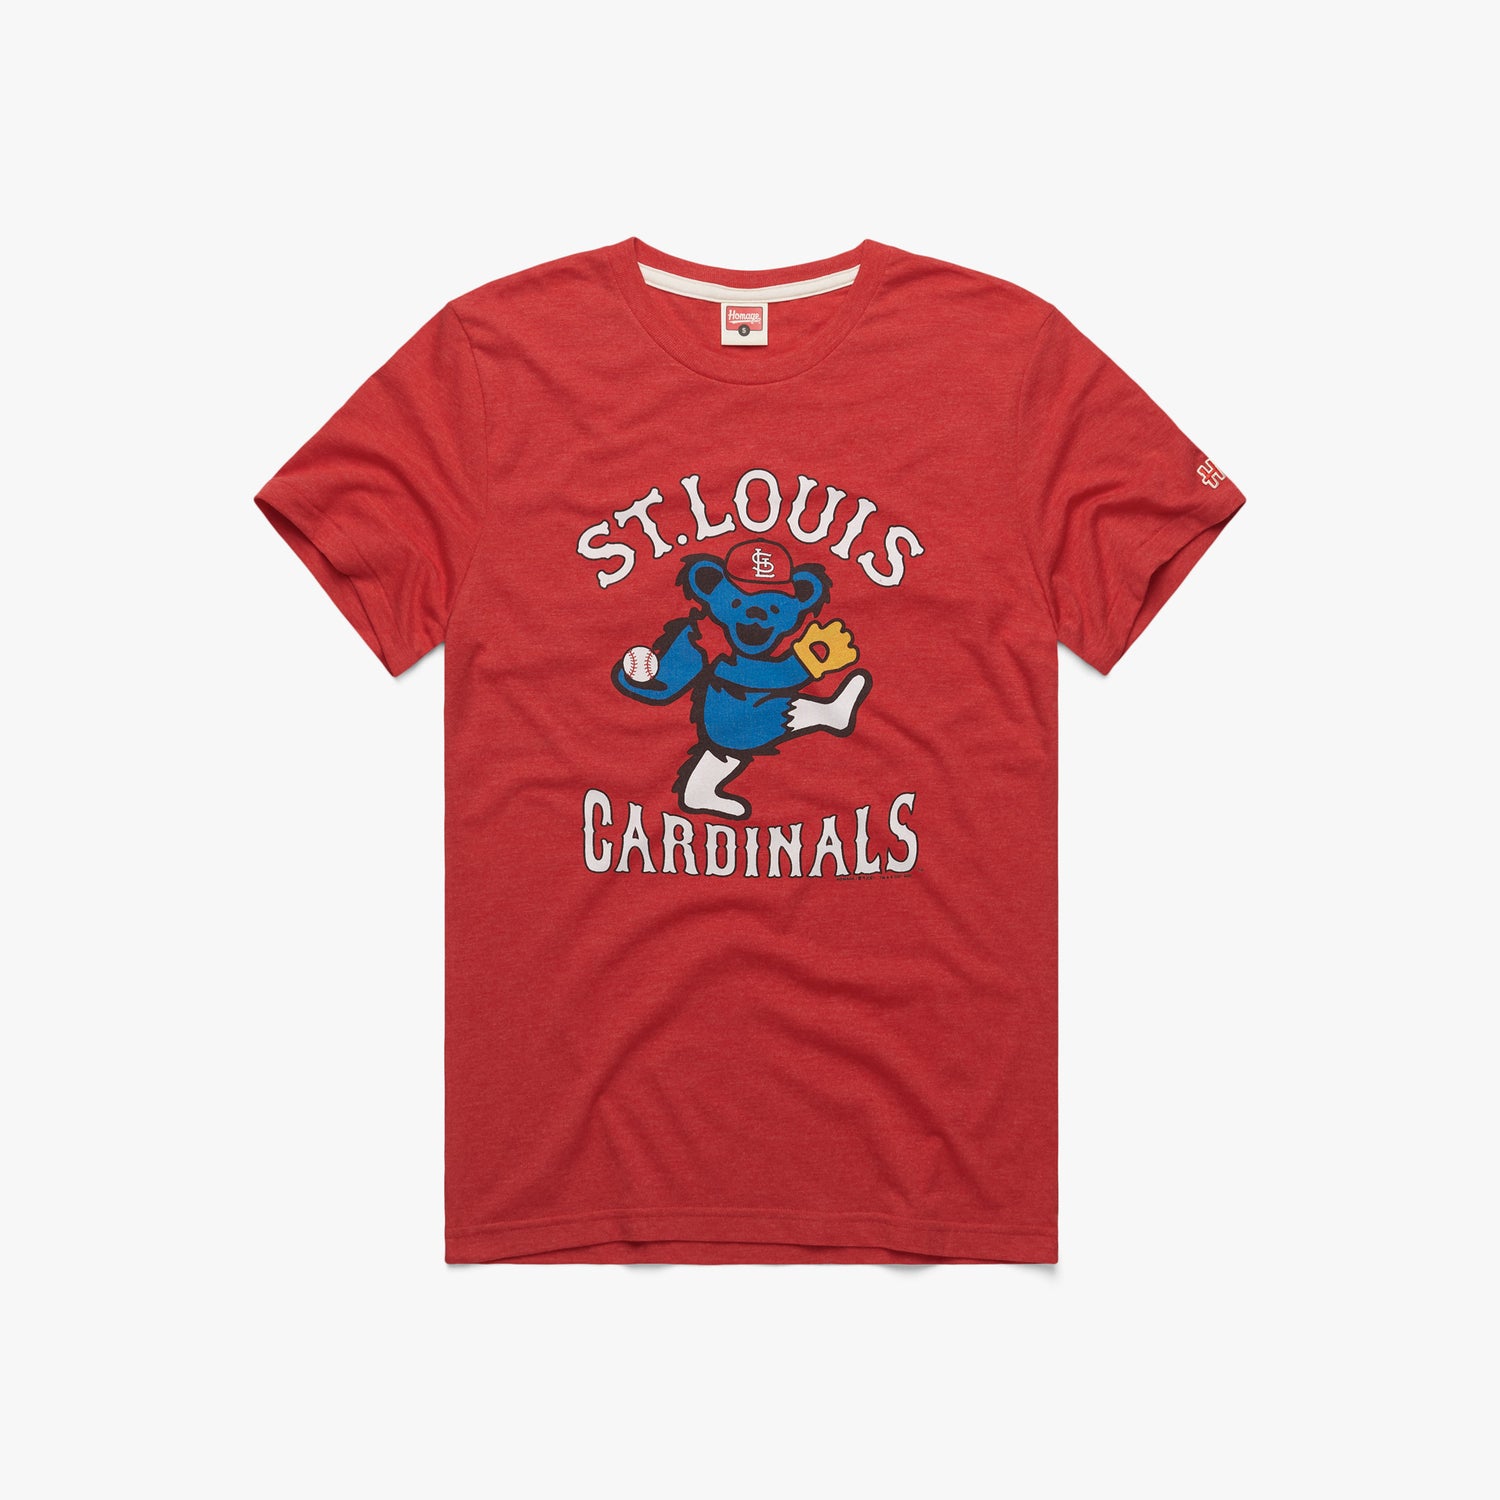 Vintage Stl Baseball Cardinals Shirt, St. Louis Cardinals Long Sleeve  Unisex Hoodie